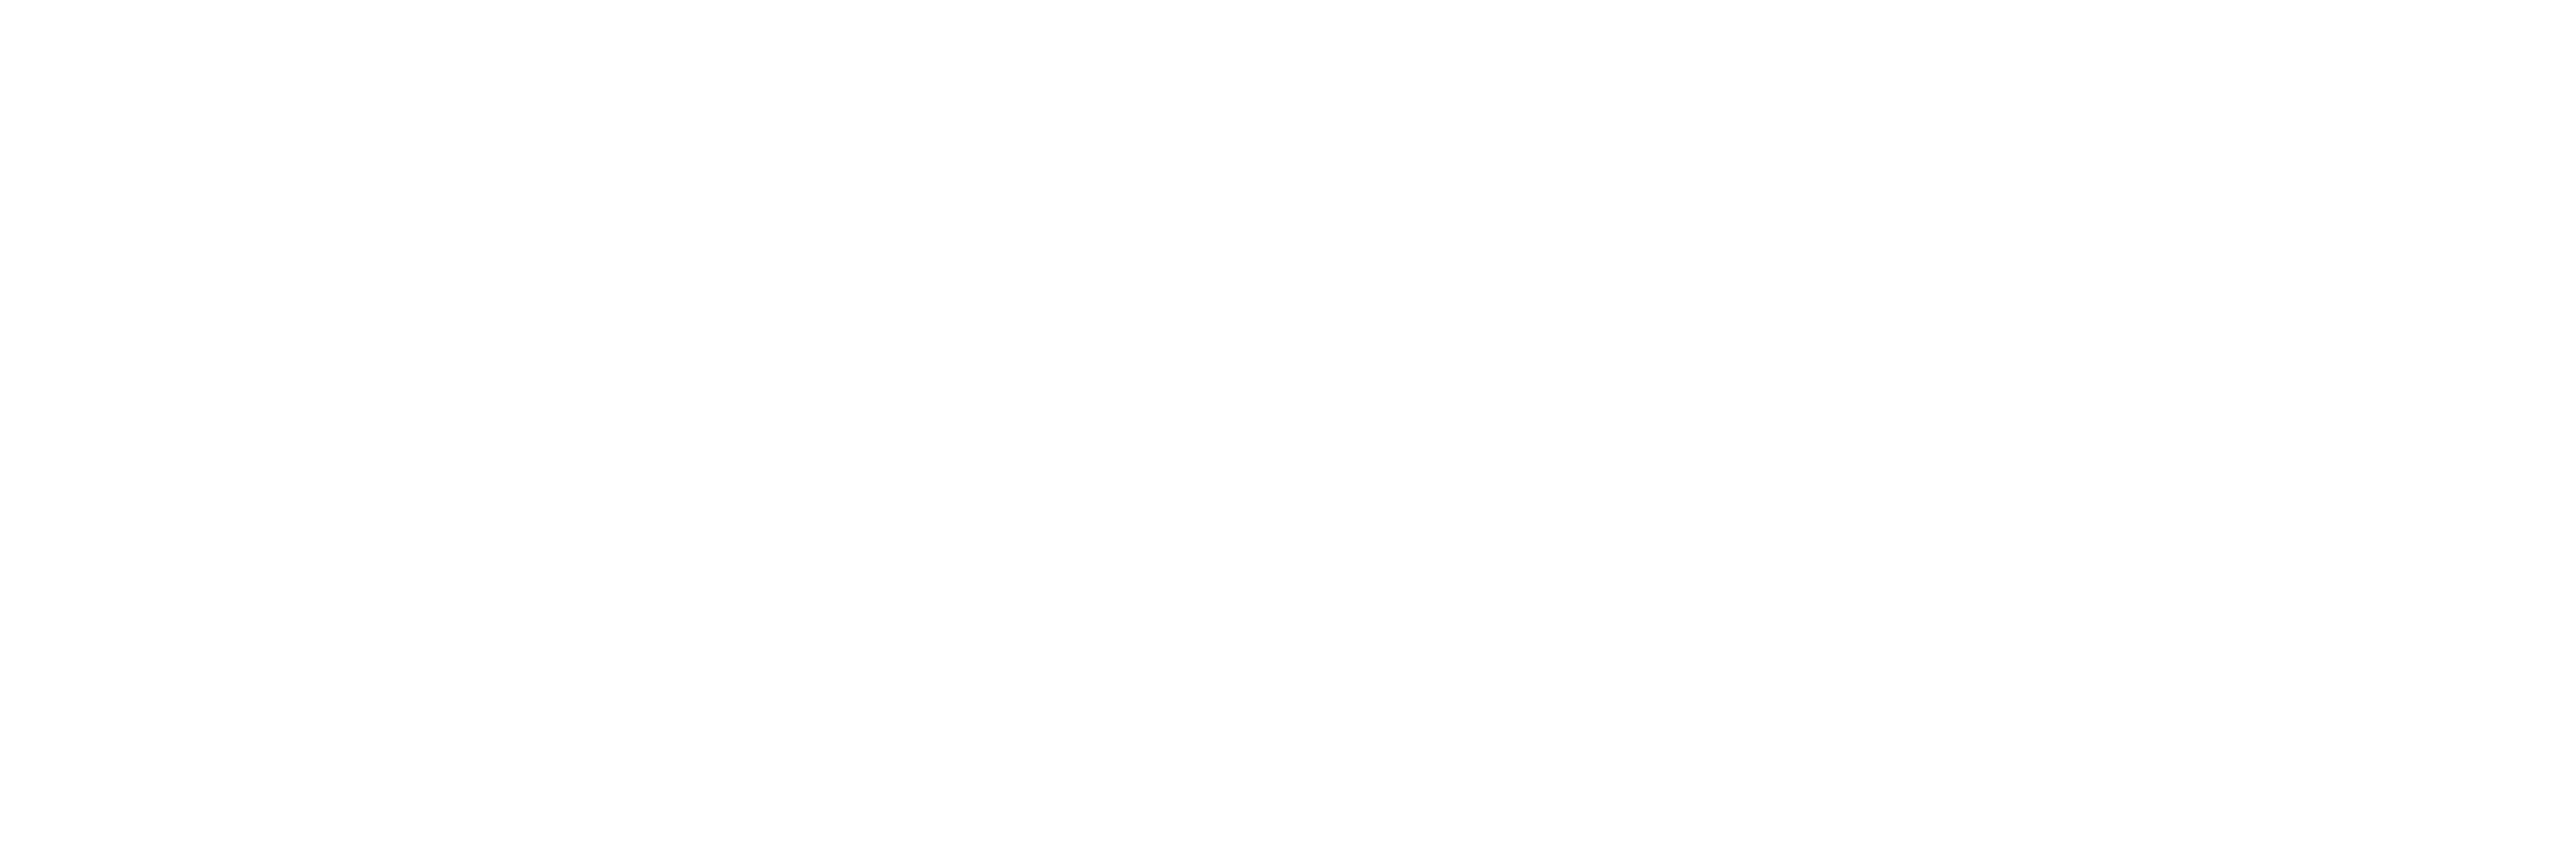 Sporko The Little Big Dream